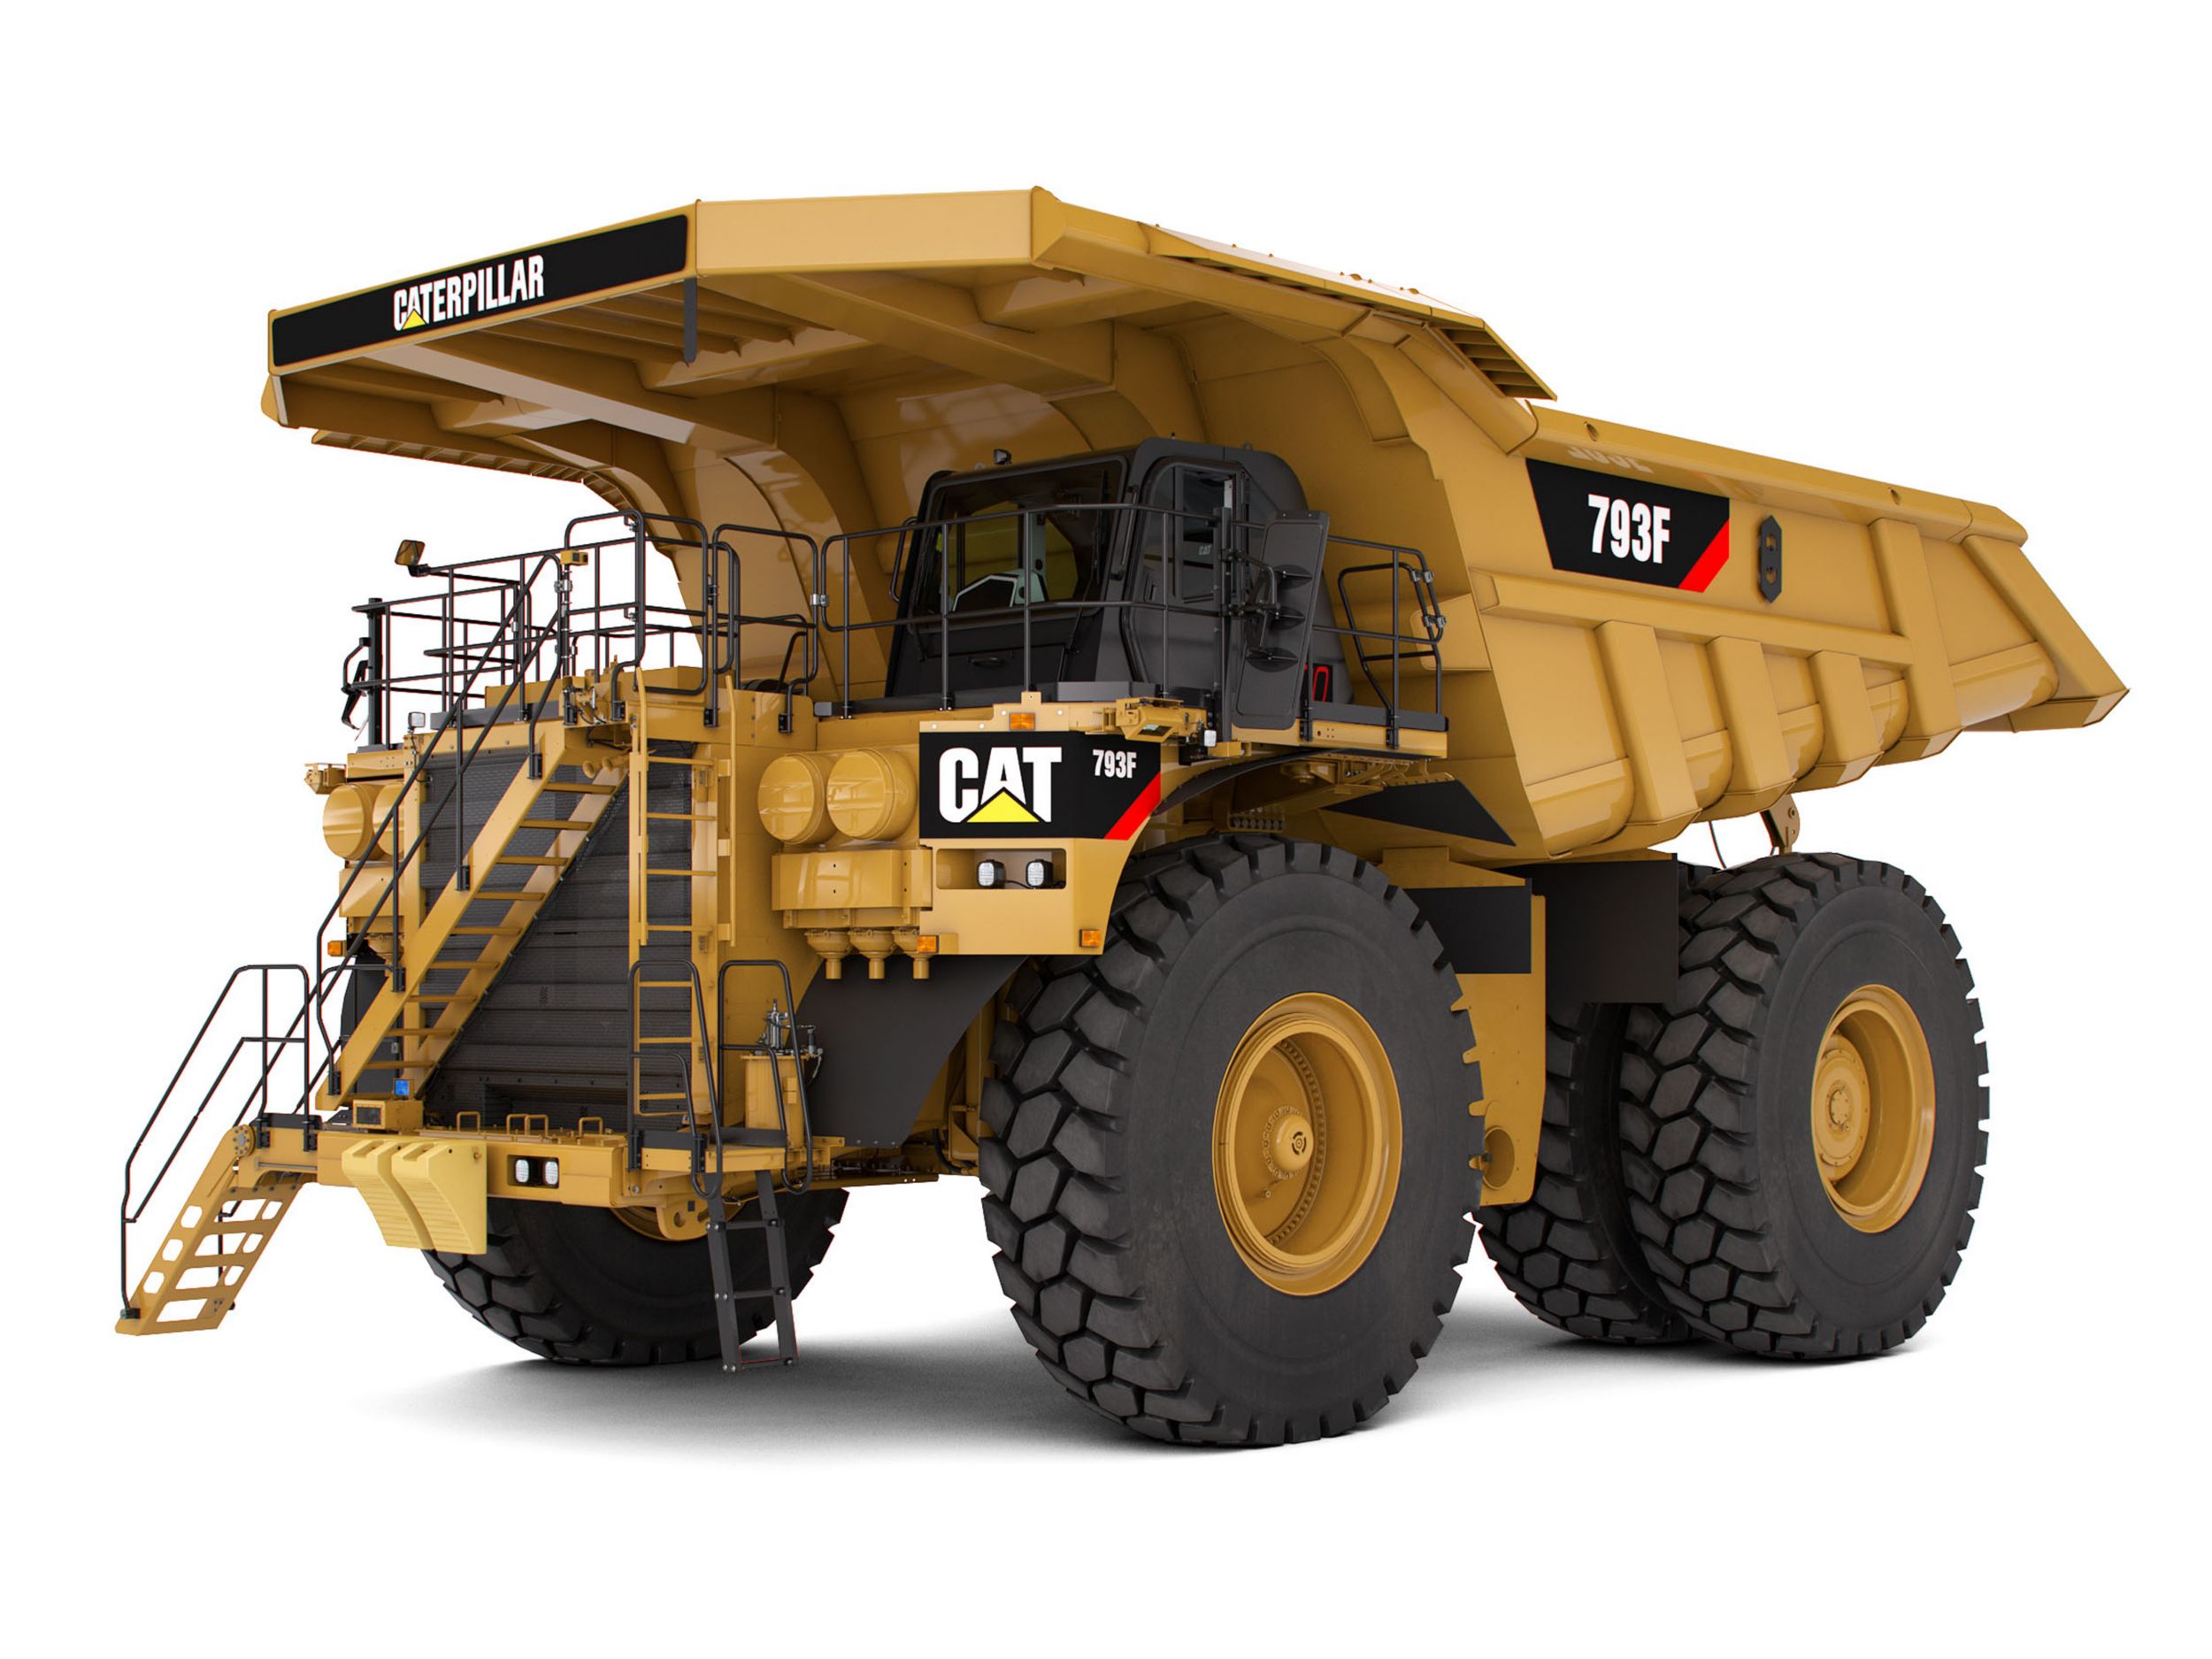 cat mining dump truck 12 volt ride on